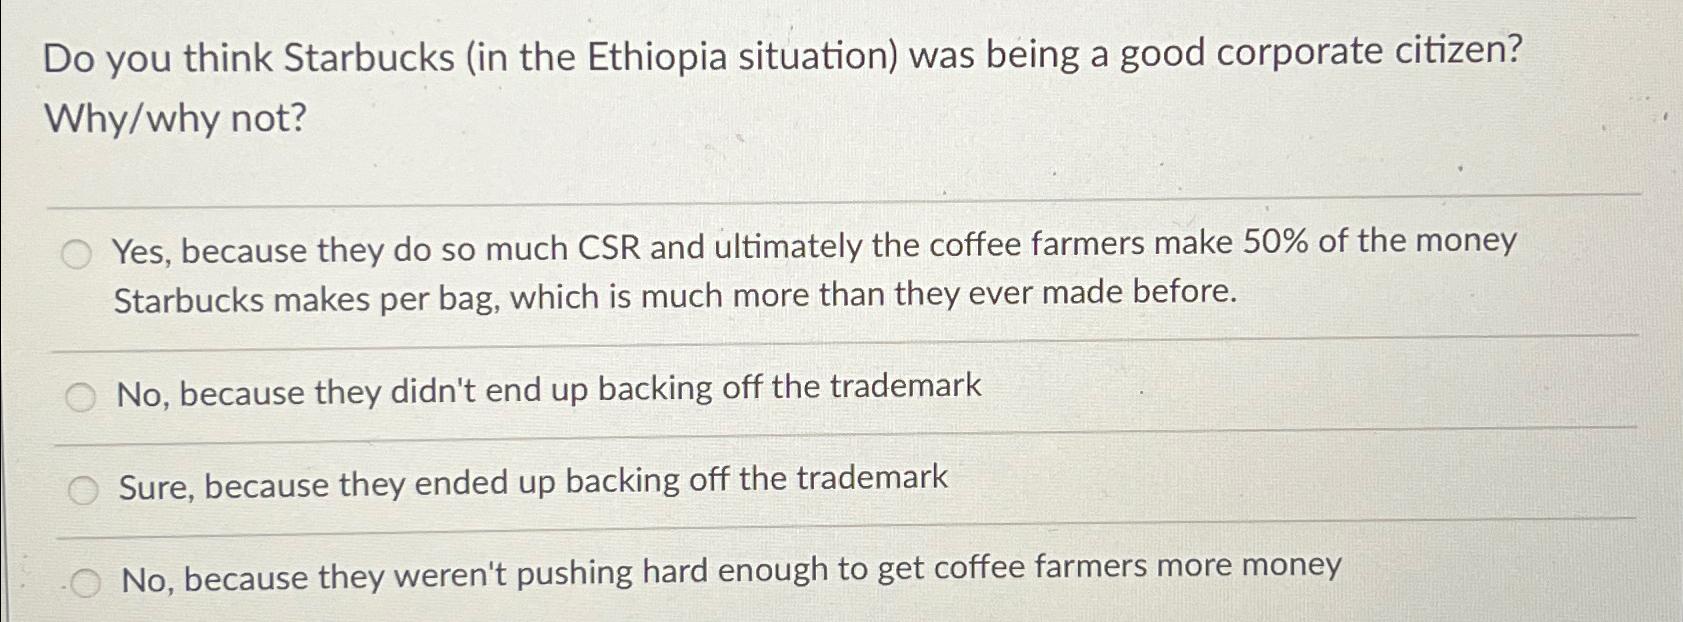 starbucks vs ethiopia case study